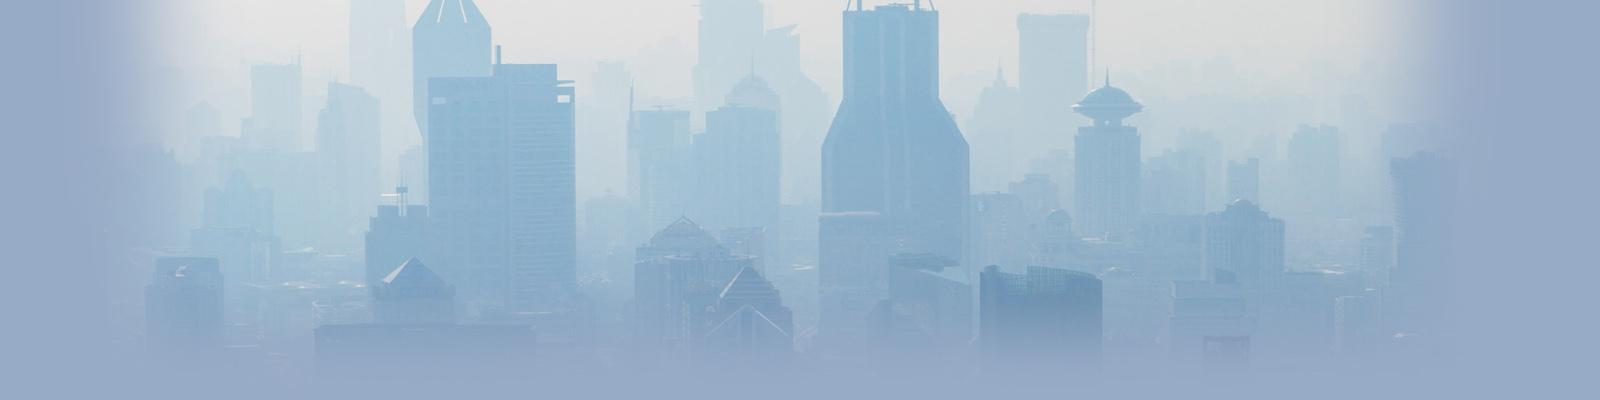 Smog in Shanghai, China